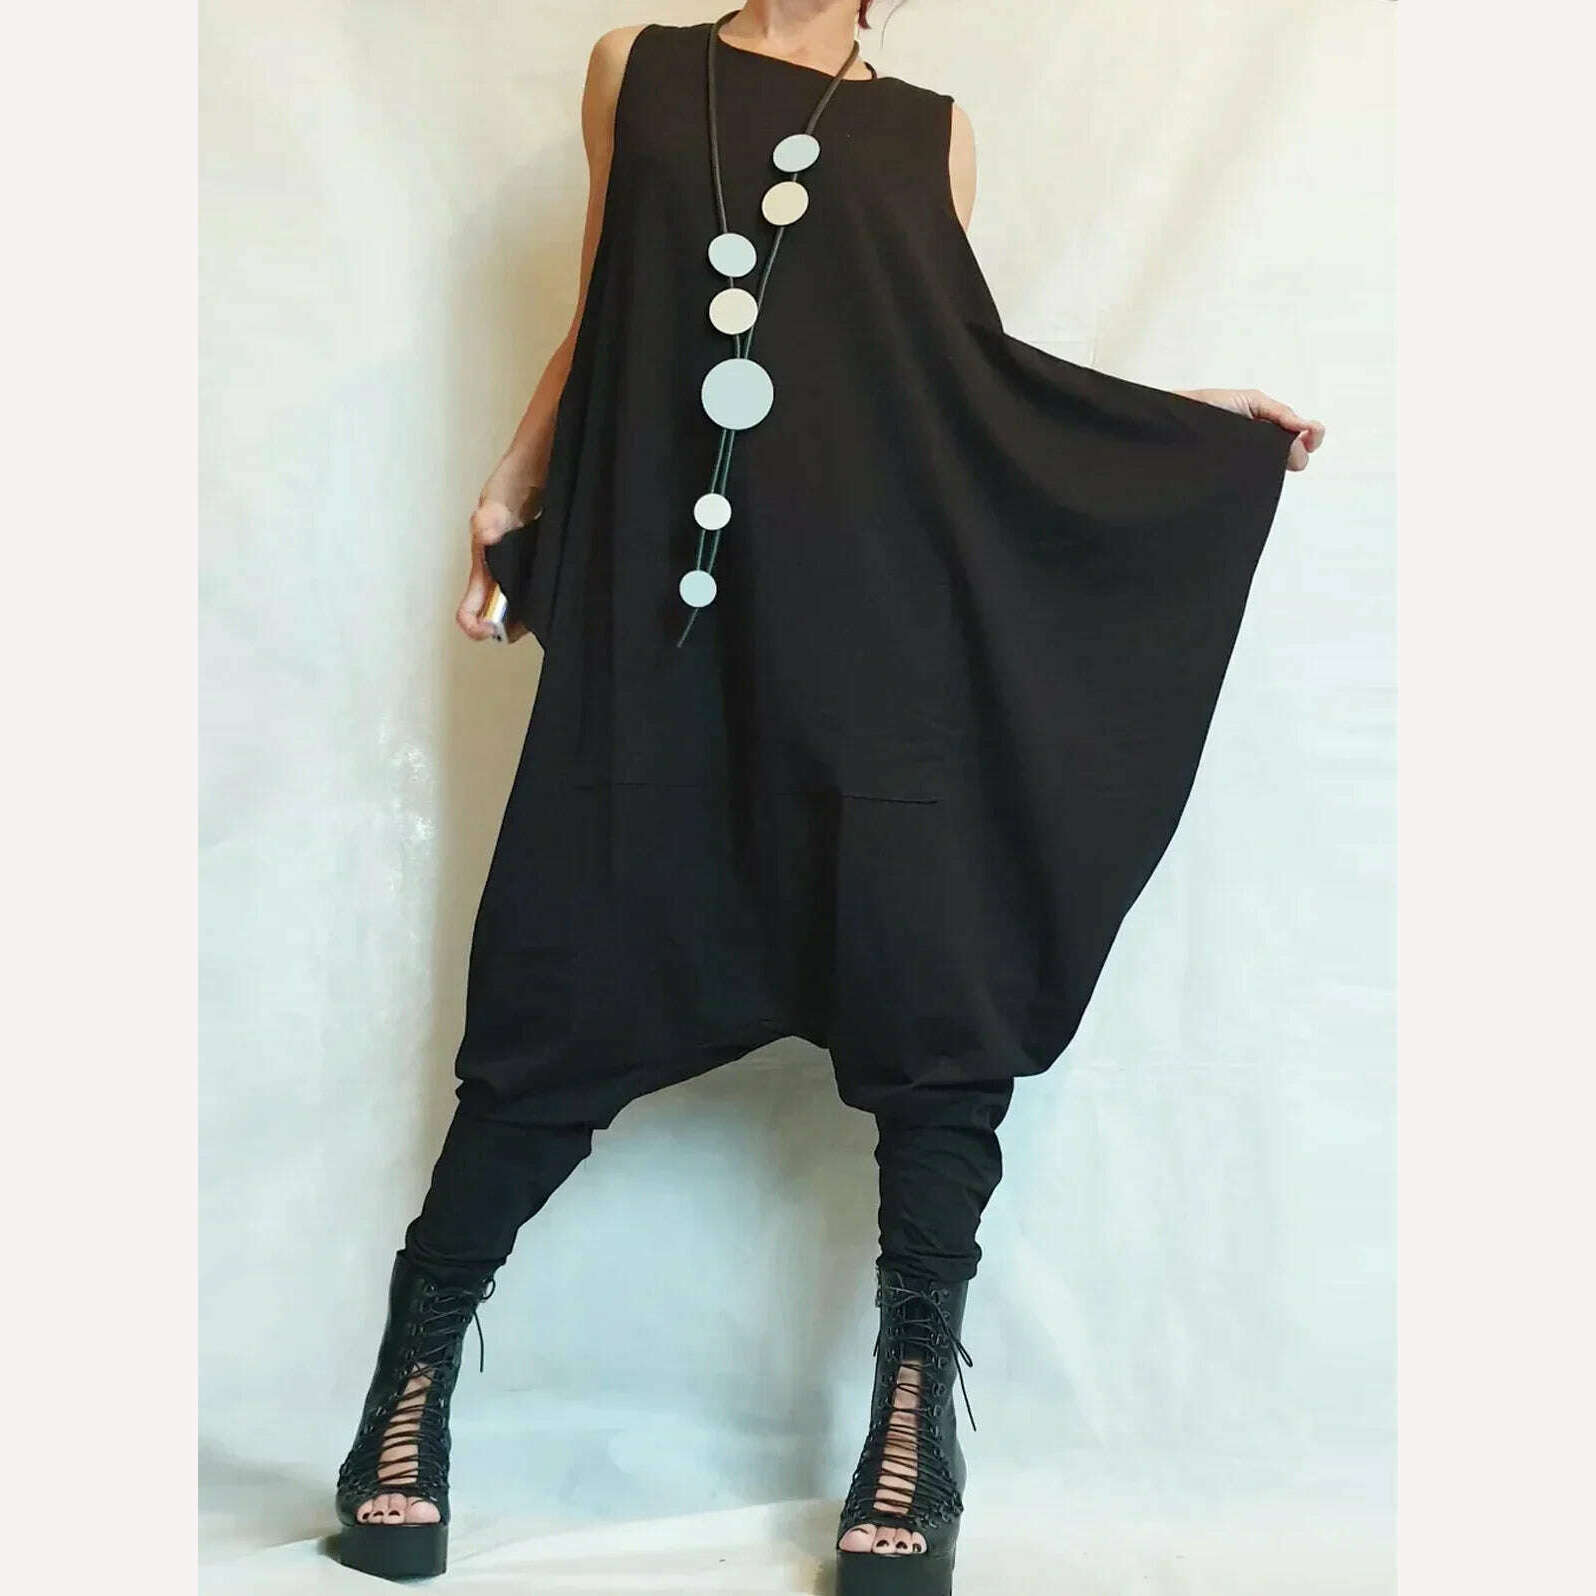 KIMLUD, Women's Jumpsuit Black Sleeveless Harem Long Pants Harajuku Street Outfit Style Suspender O-neck Low Waisted Tank Top Jumpsuit, Black / L, KIMLUD Womens Clothes